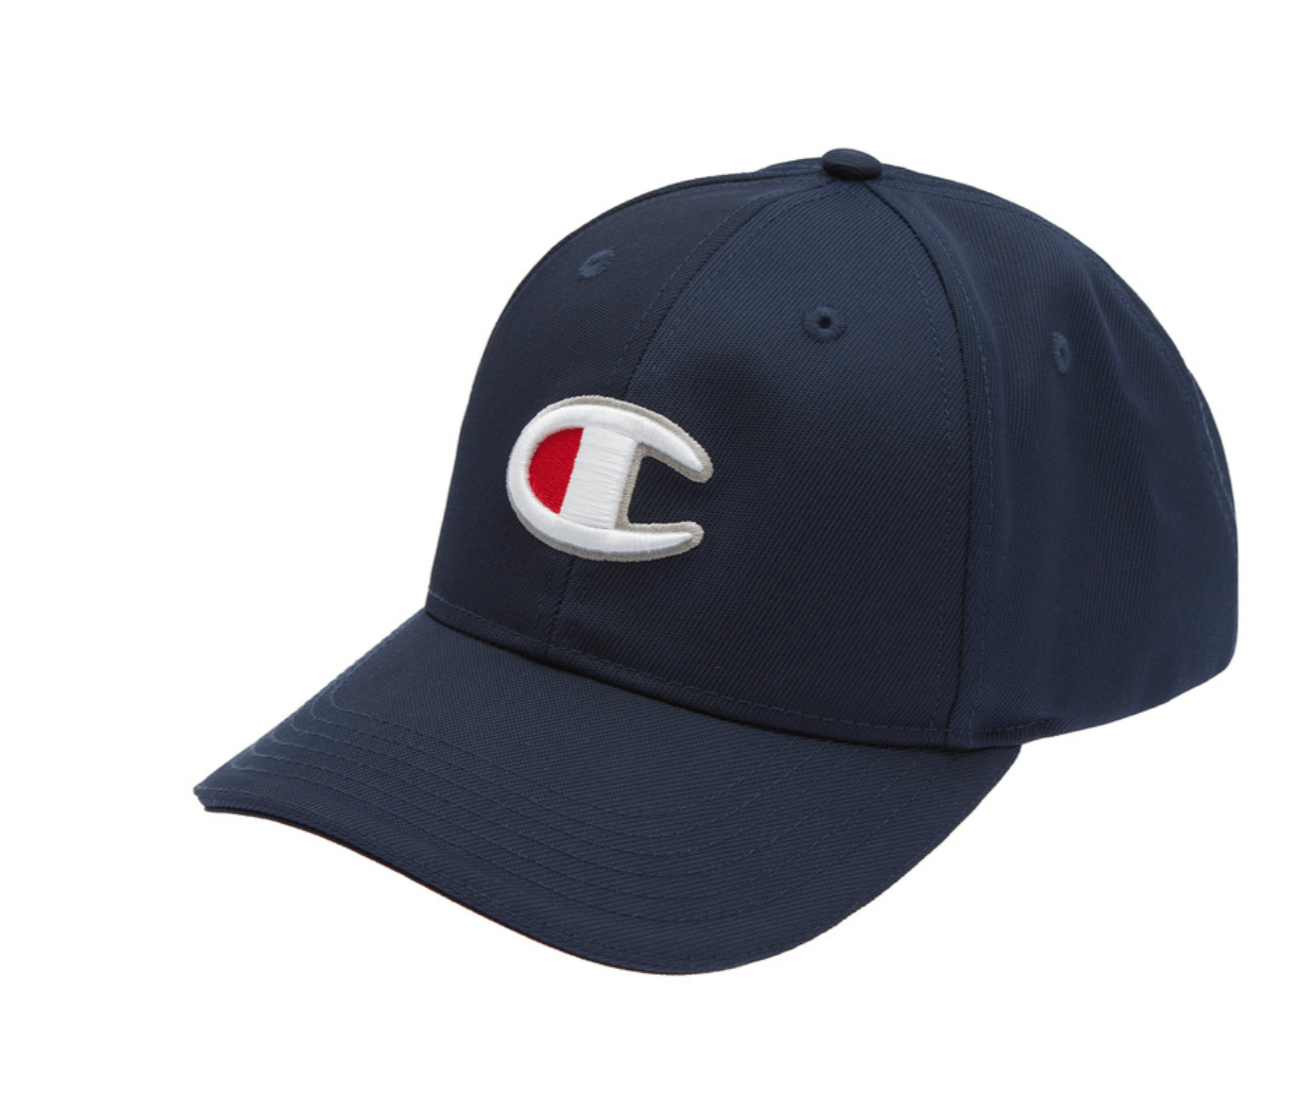 Champion Men's C Logo Cap Navy